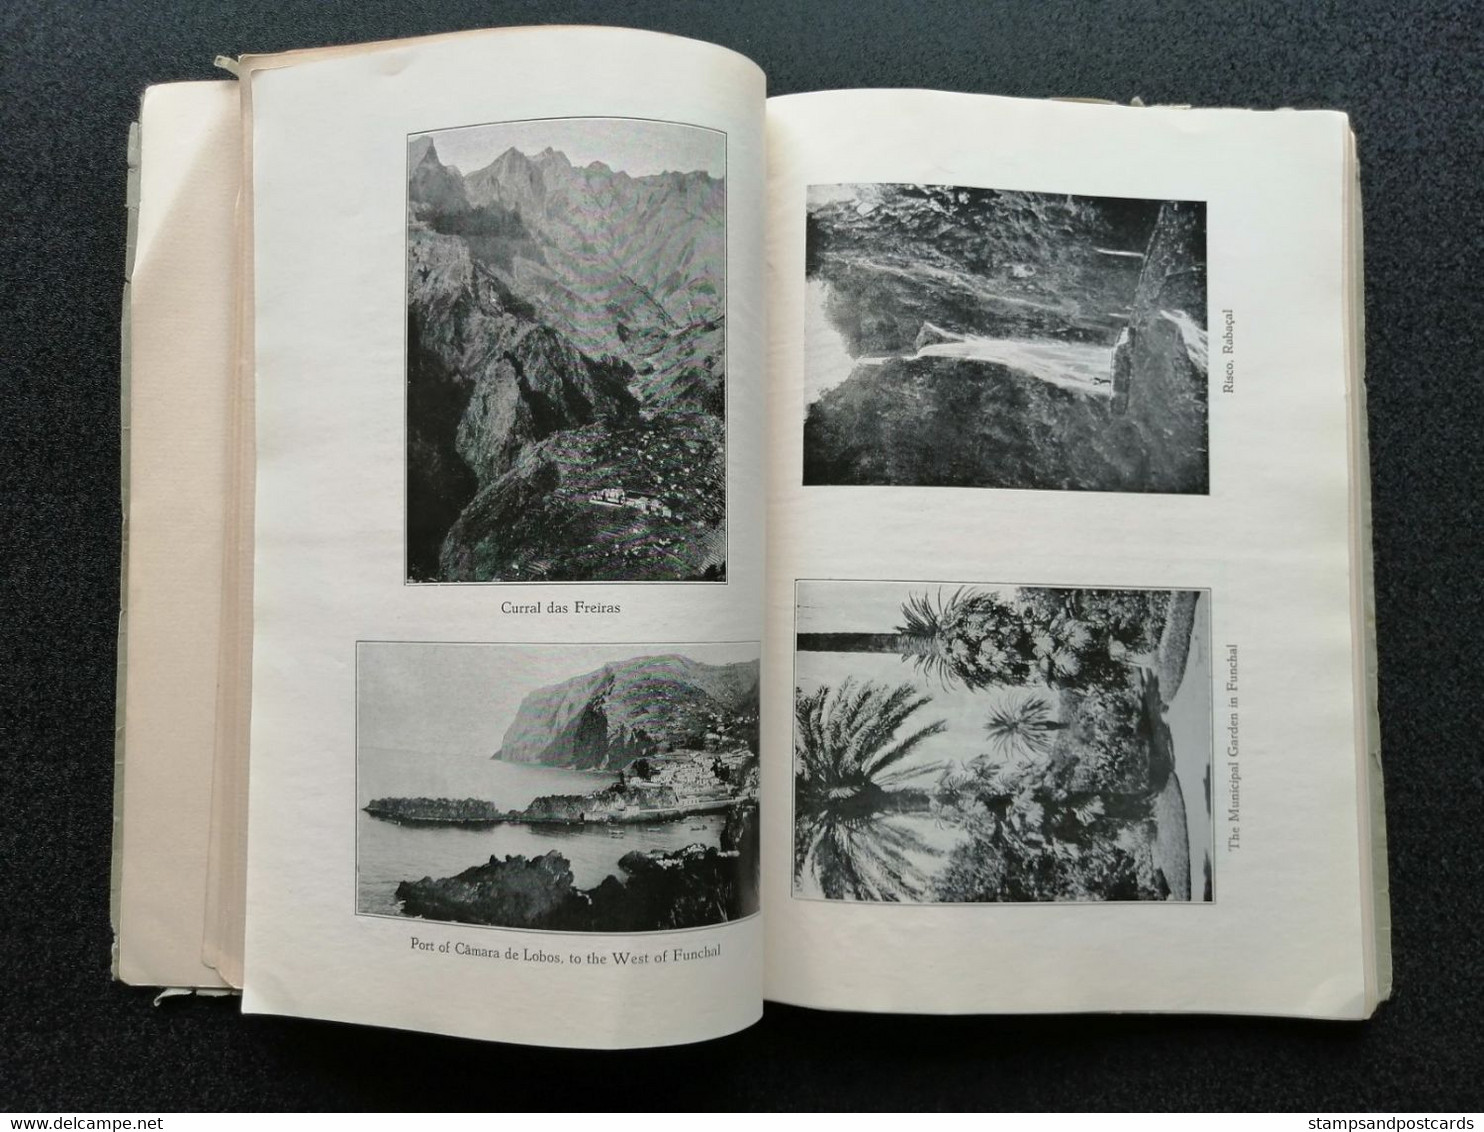 Book The Climate Of Madeira With A Comparative Study, Madeira Island, Hugo De Lacerda Castelo Branco, 1938 - Europa